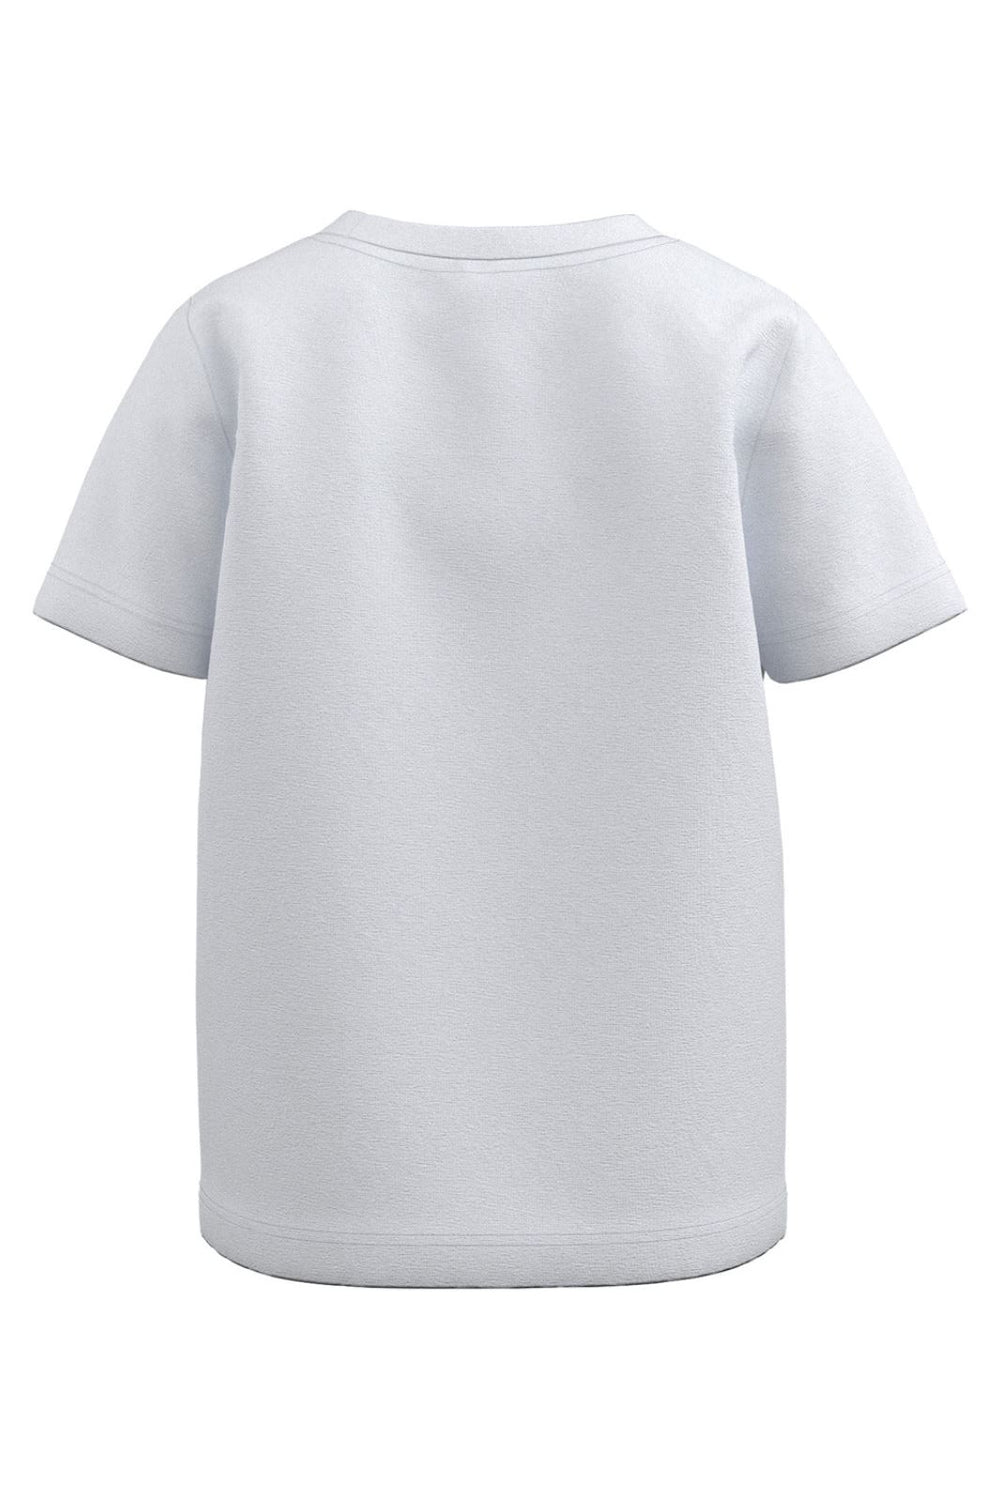 Name it - Nmffaithe Ss Top Box - Bright White T-shirts 